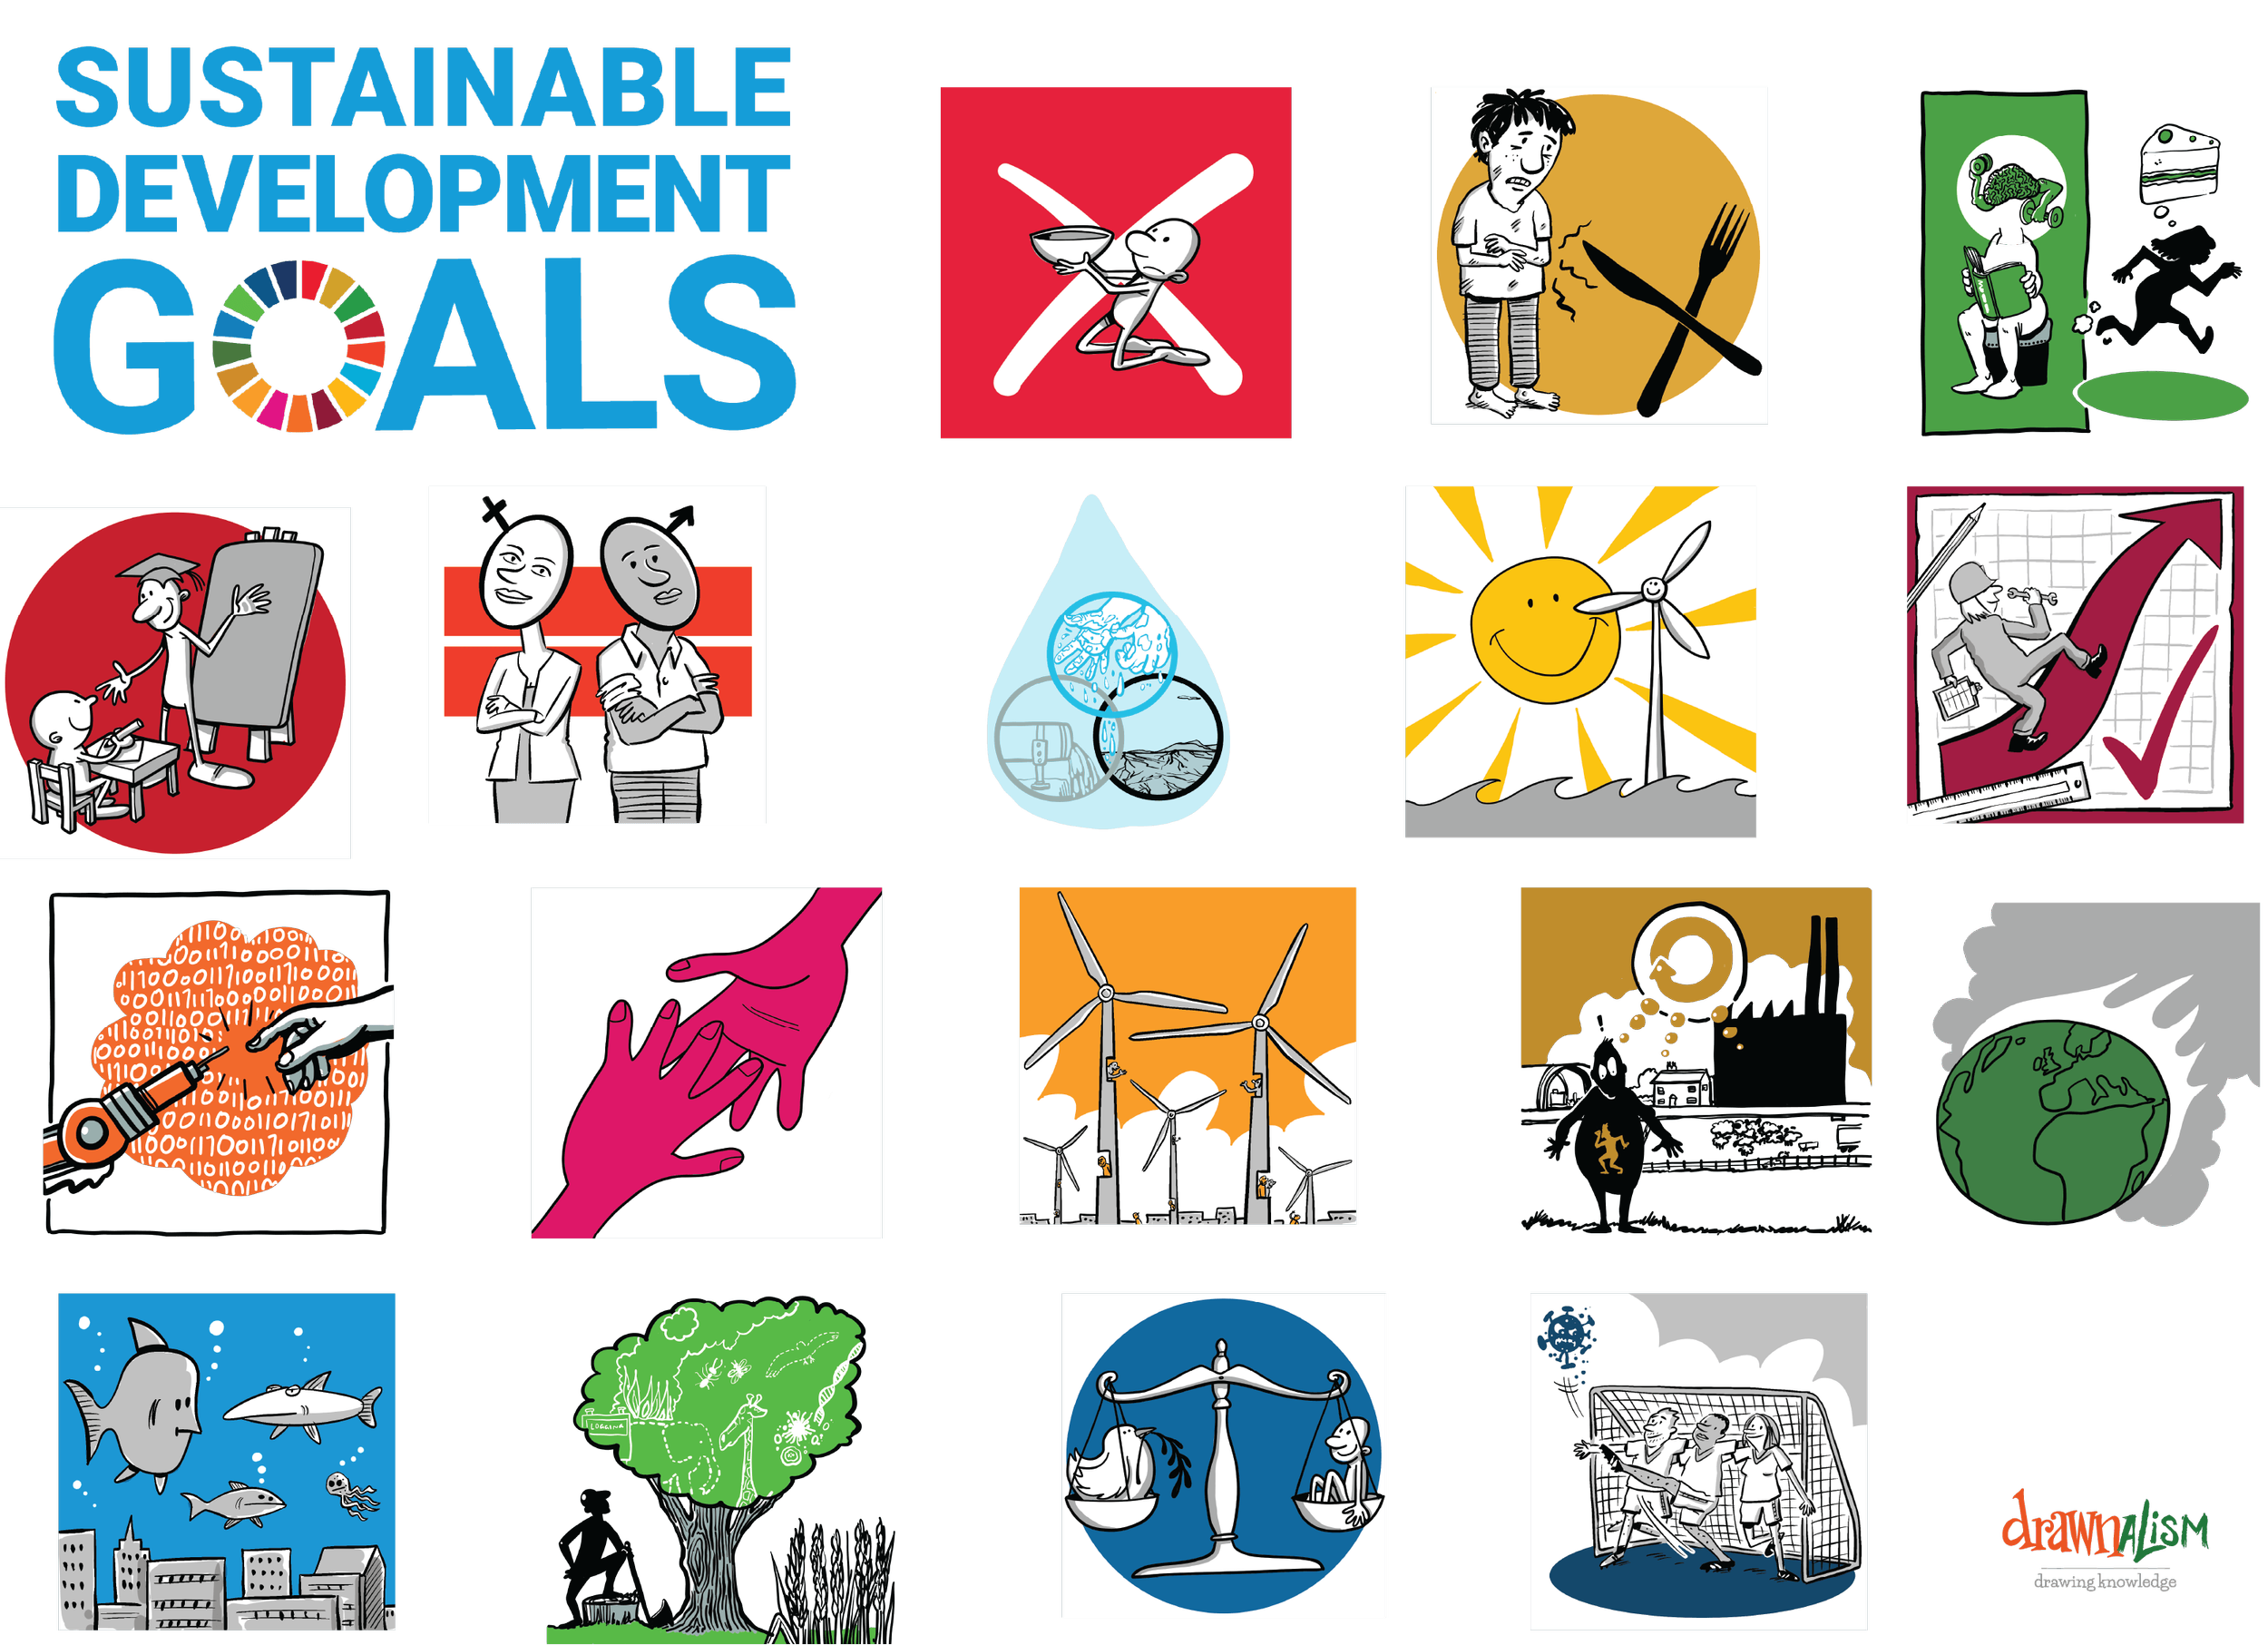 UN SDGs by Drawnalism v3.png.png